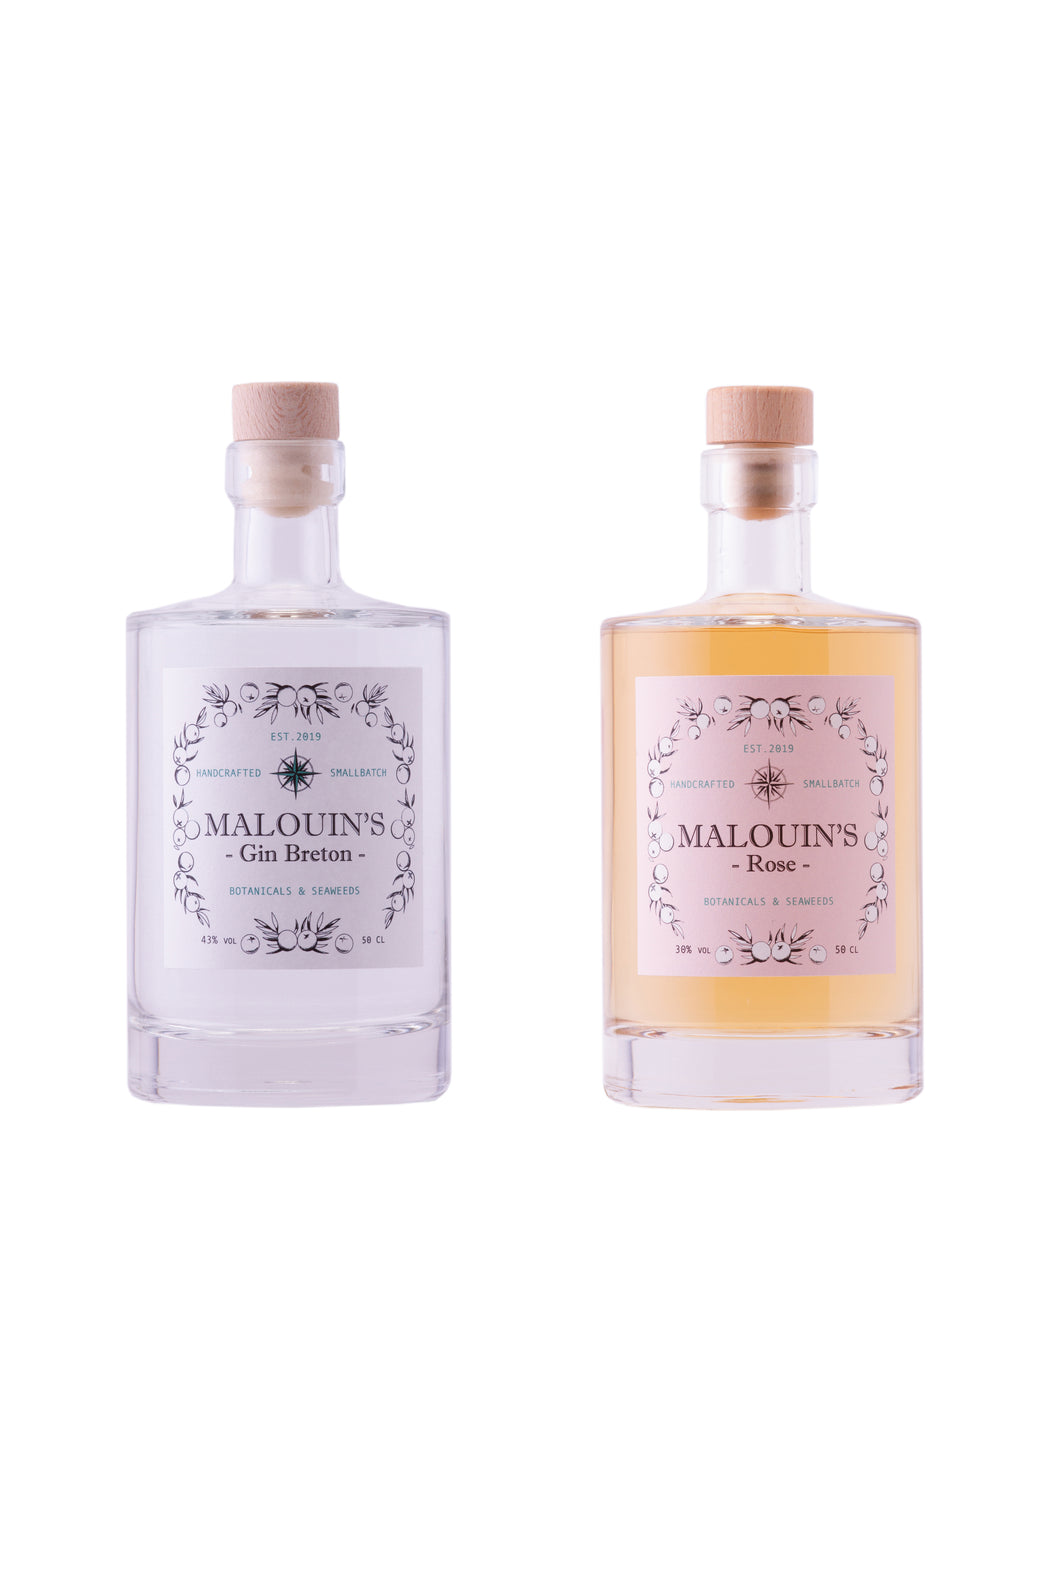 Malouin's Gin Breton - Malouin's Rose